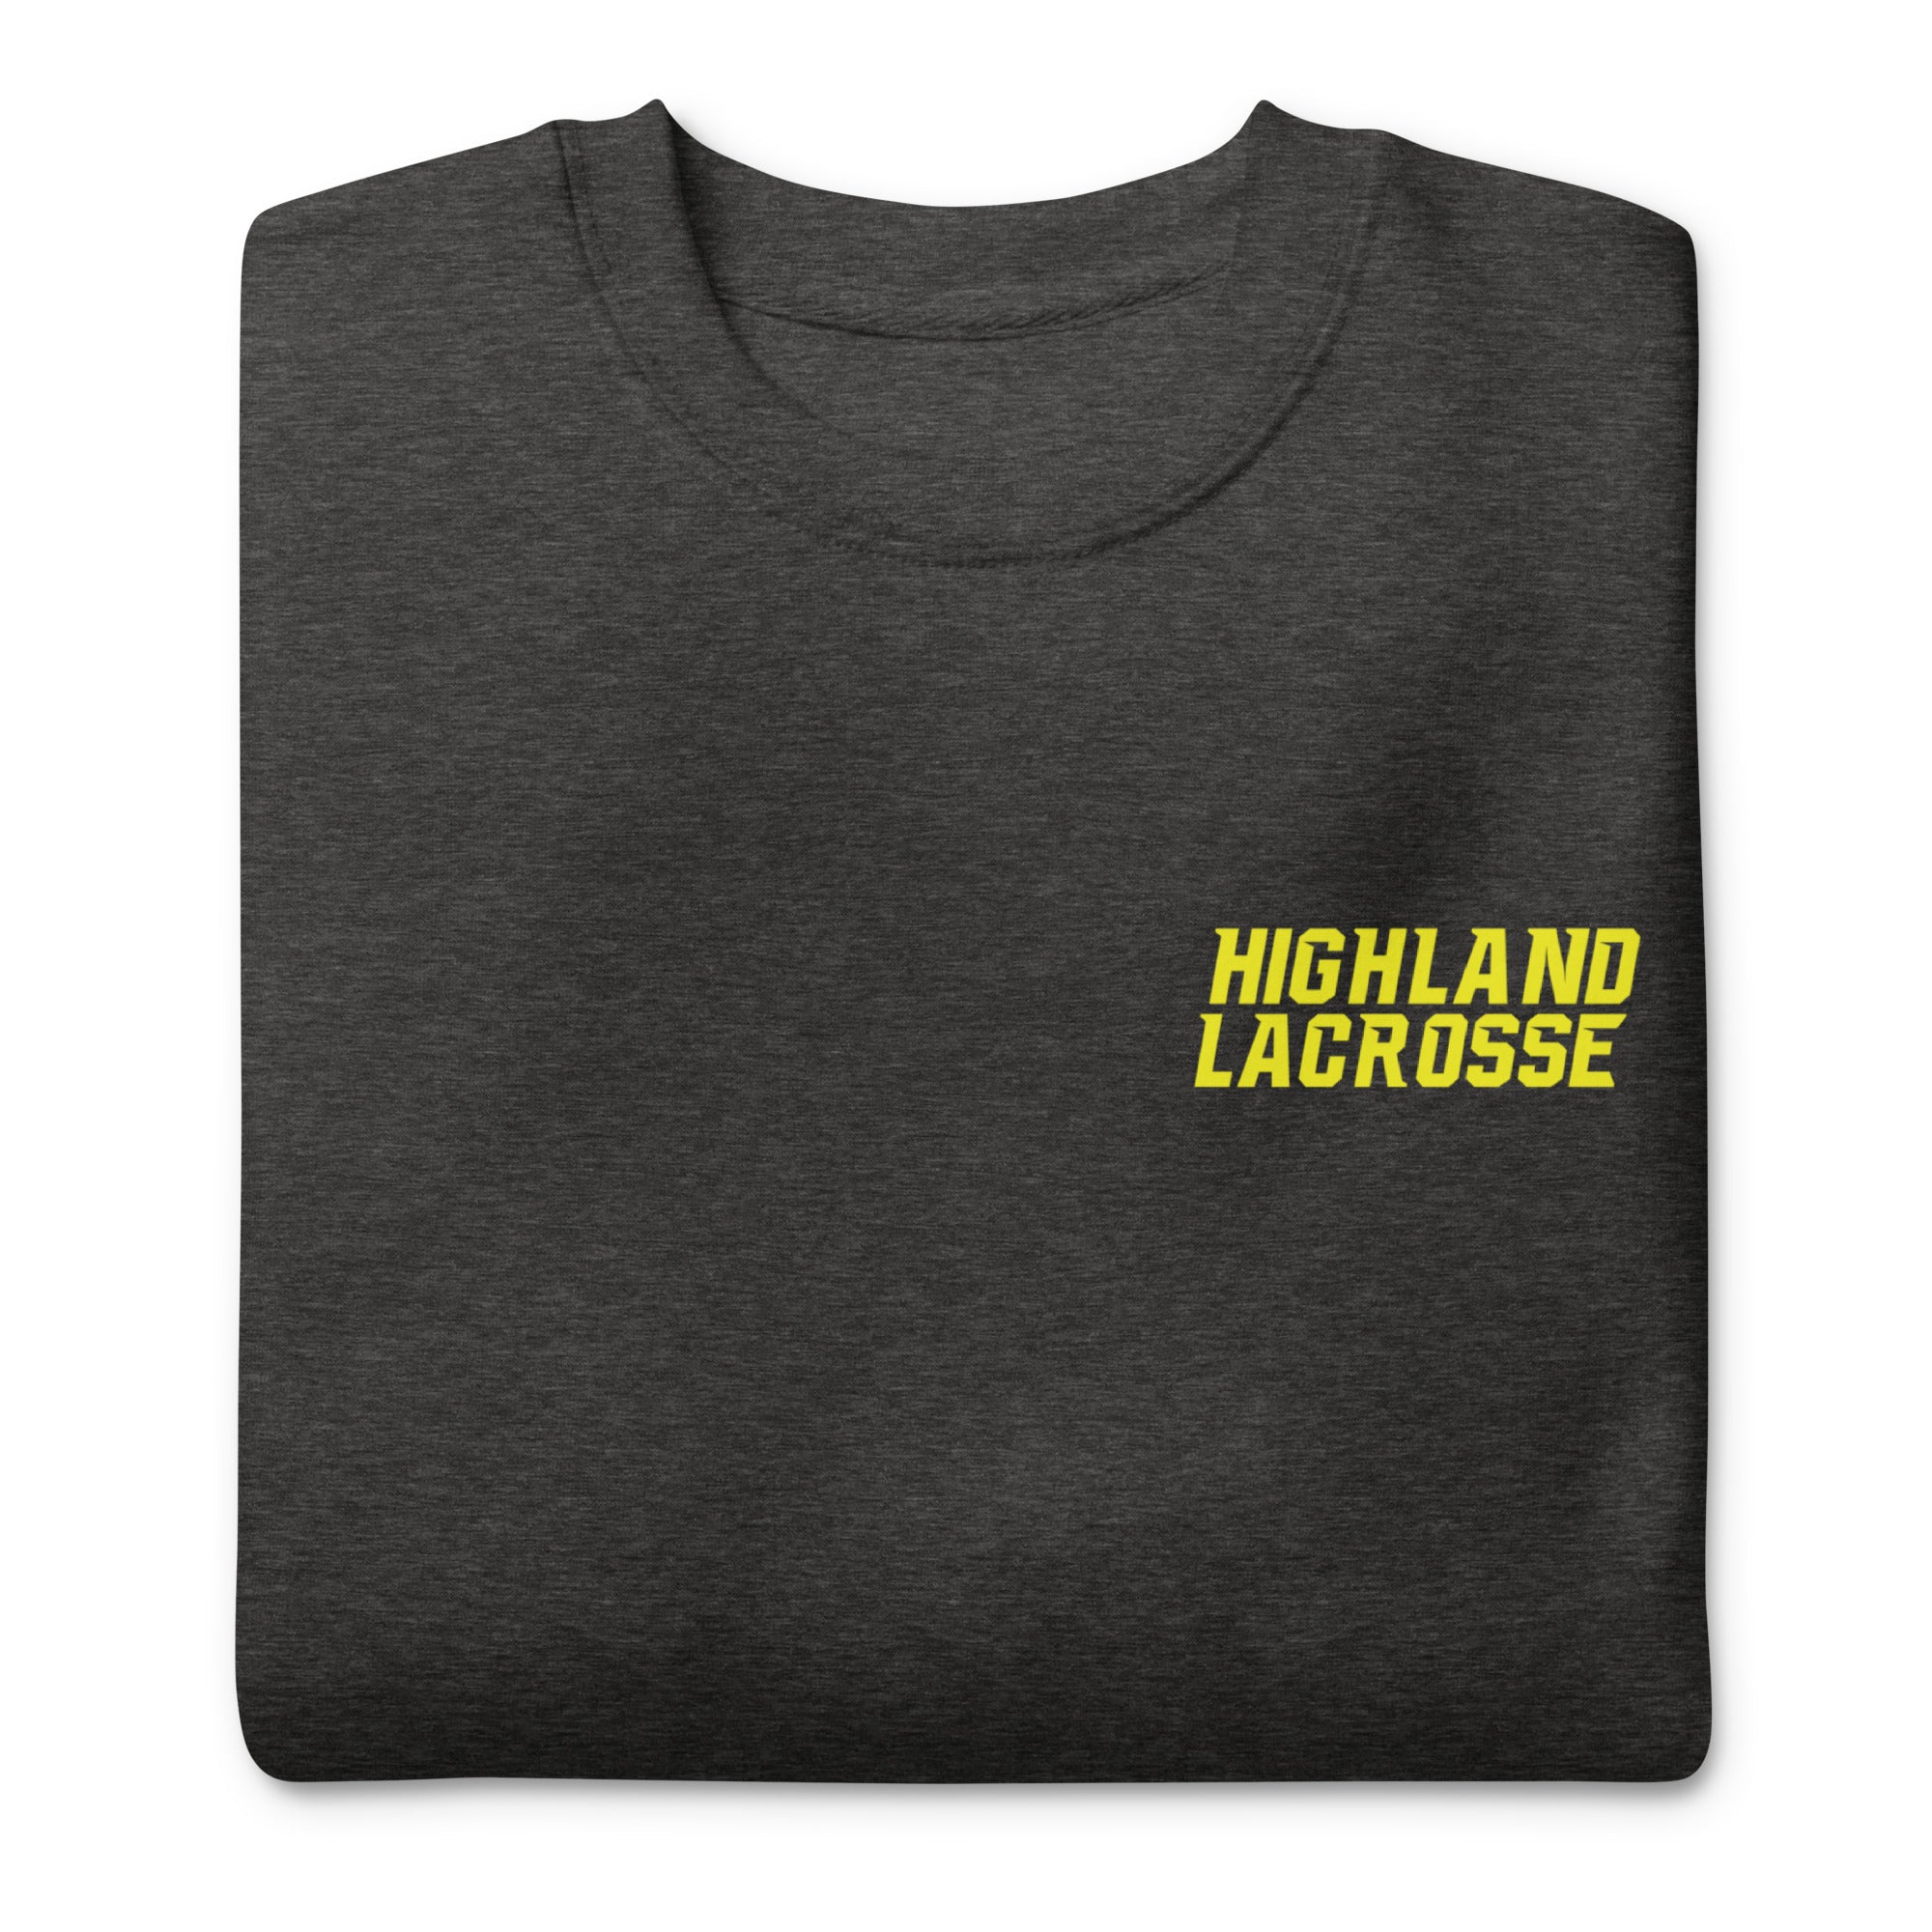 Highland Unisex Premium Sweatshirt